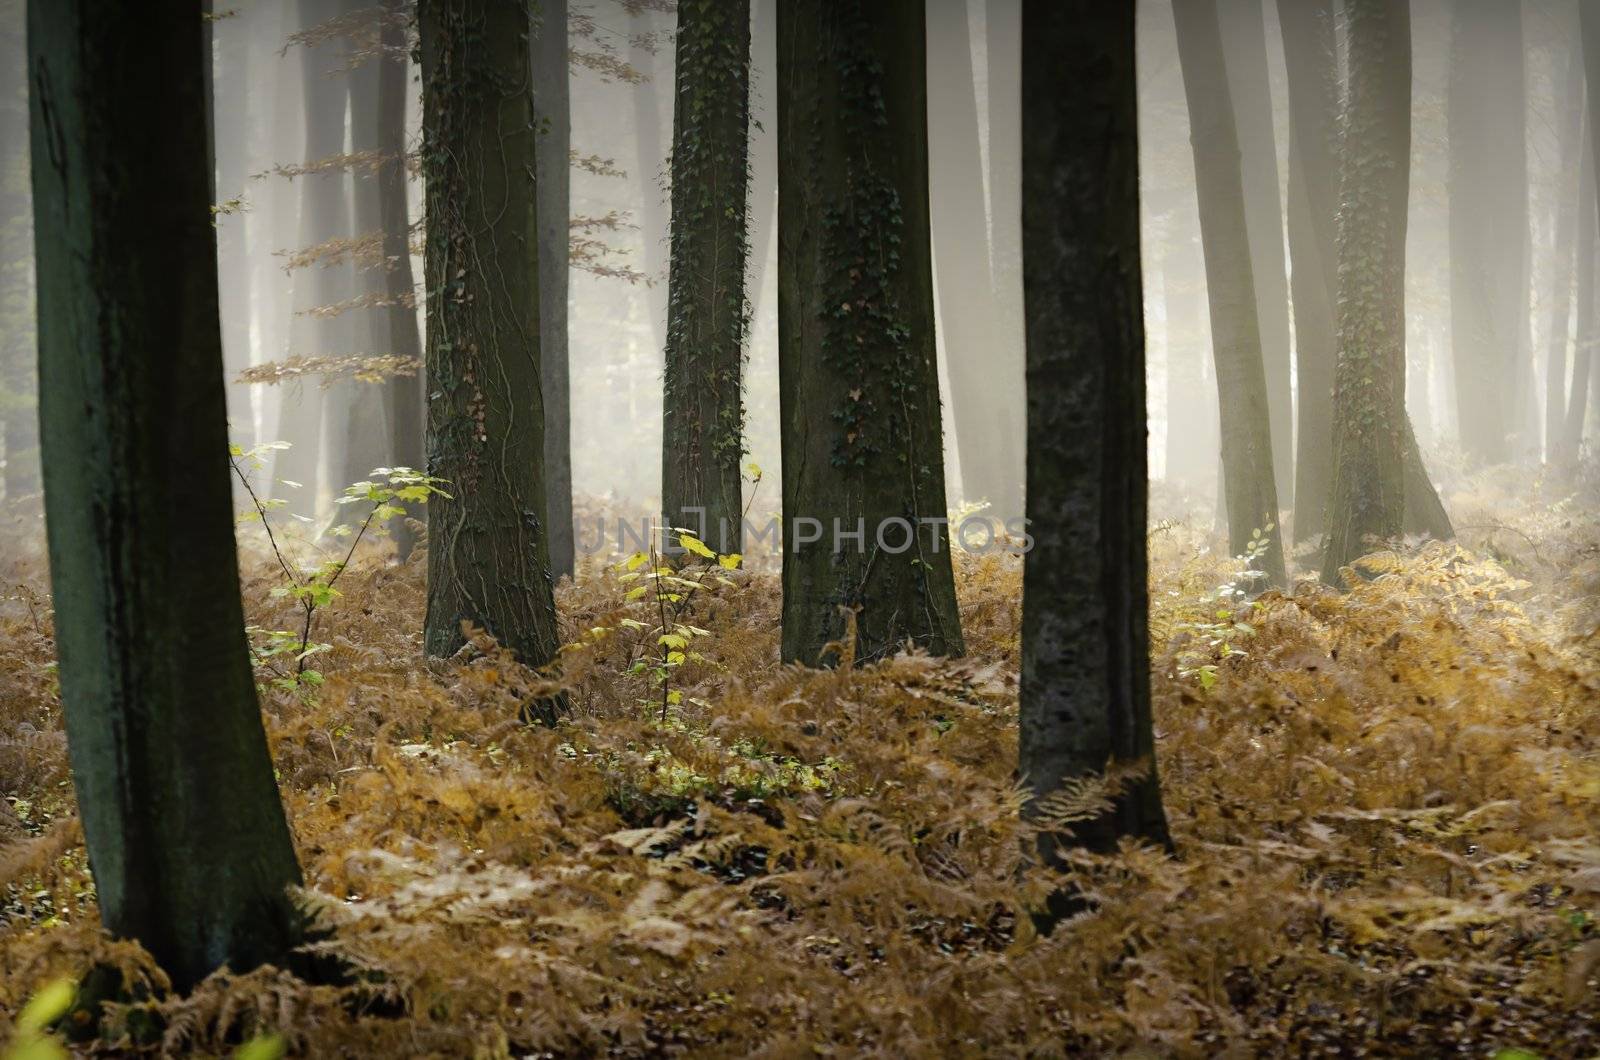 Misty forest by gufoto